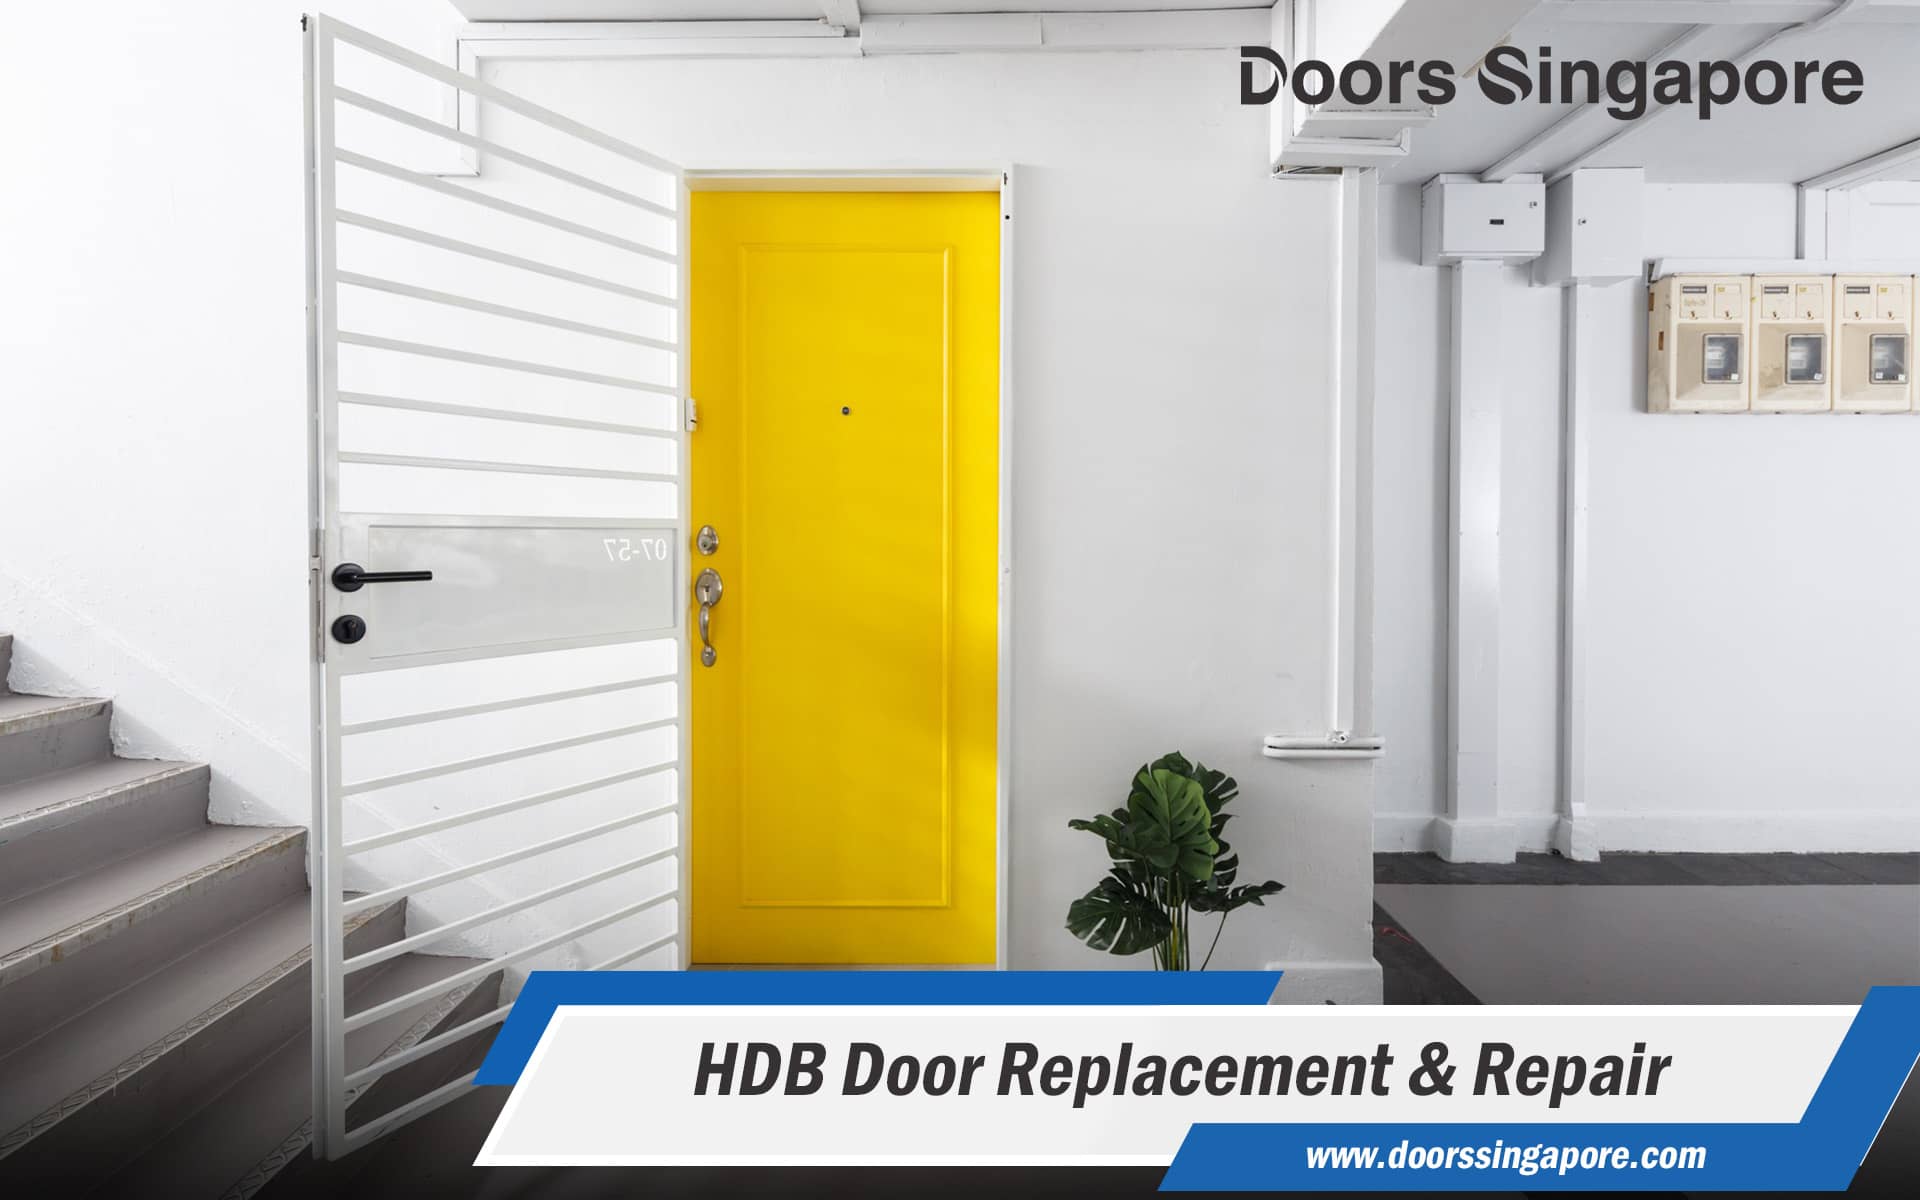 HDB Door Replacement & Repair